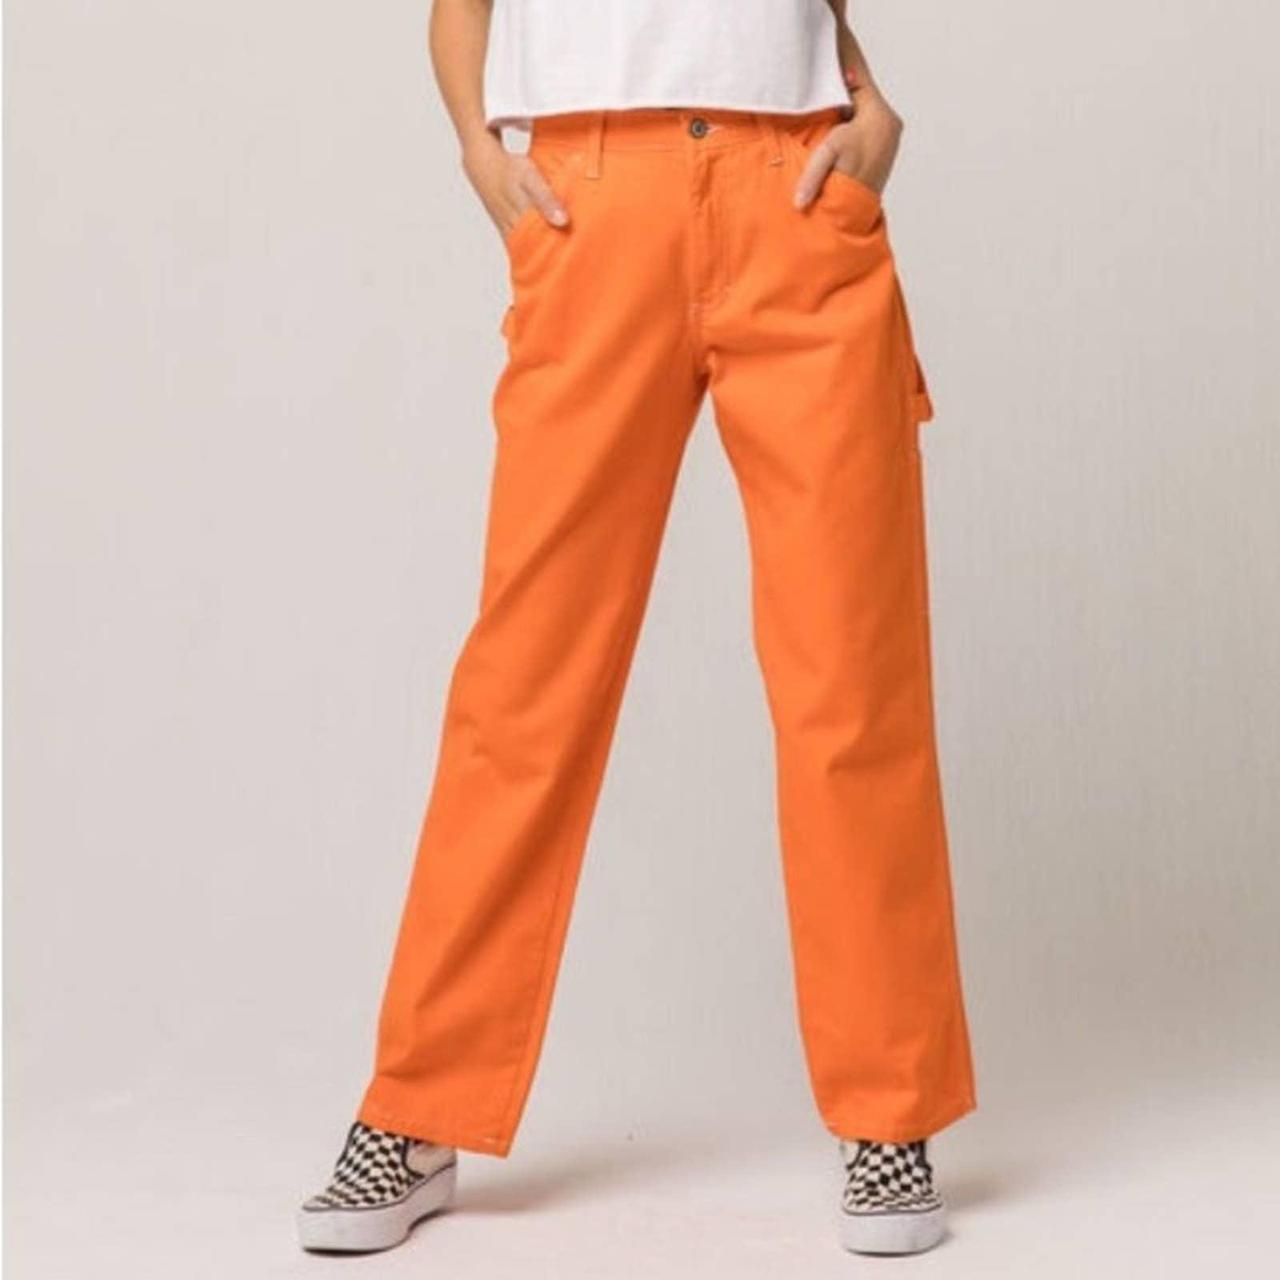 DICKIES Orange Carpenter Pants - ORANGE | Tillys | Carpenter pants, Pants,  Orange fashion